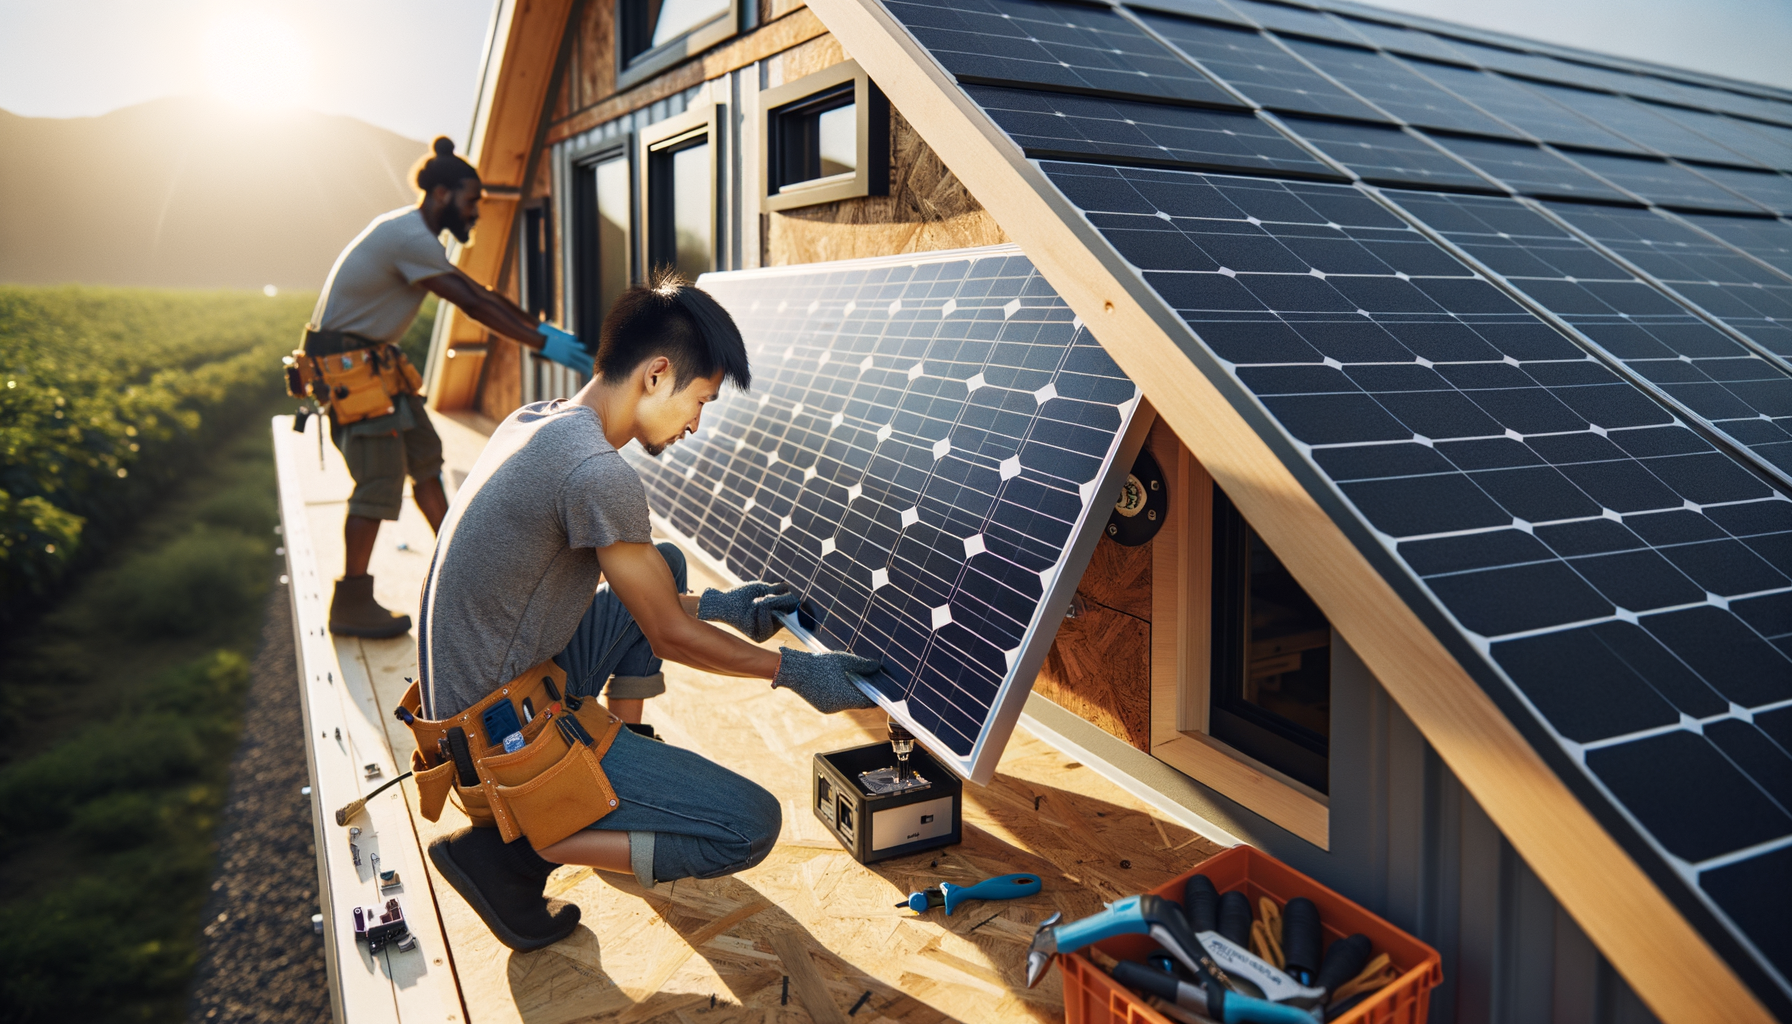 ALT: Installing solar panel on tiny home